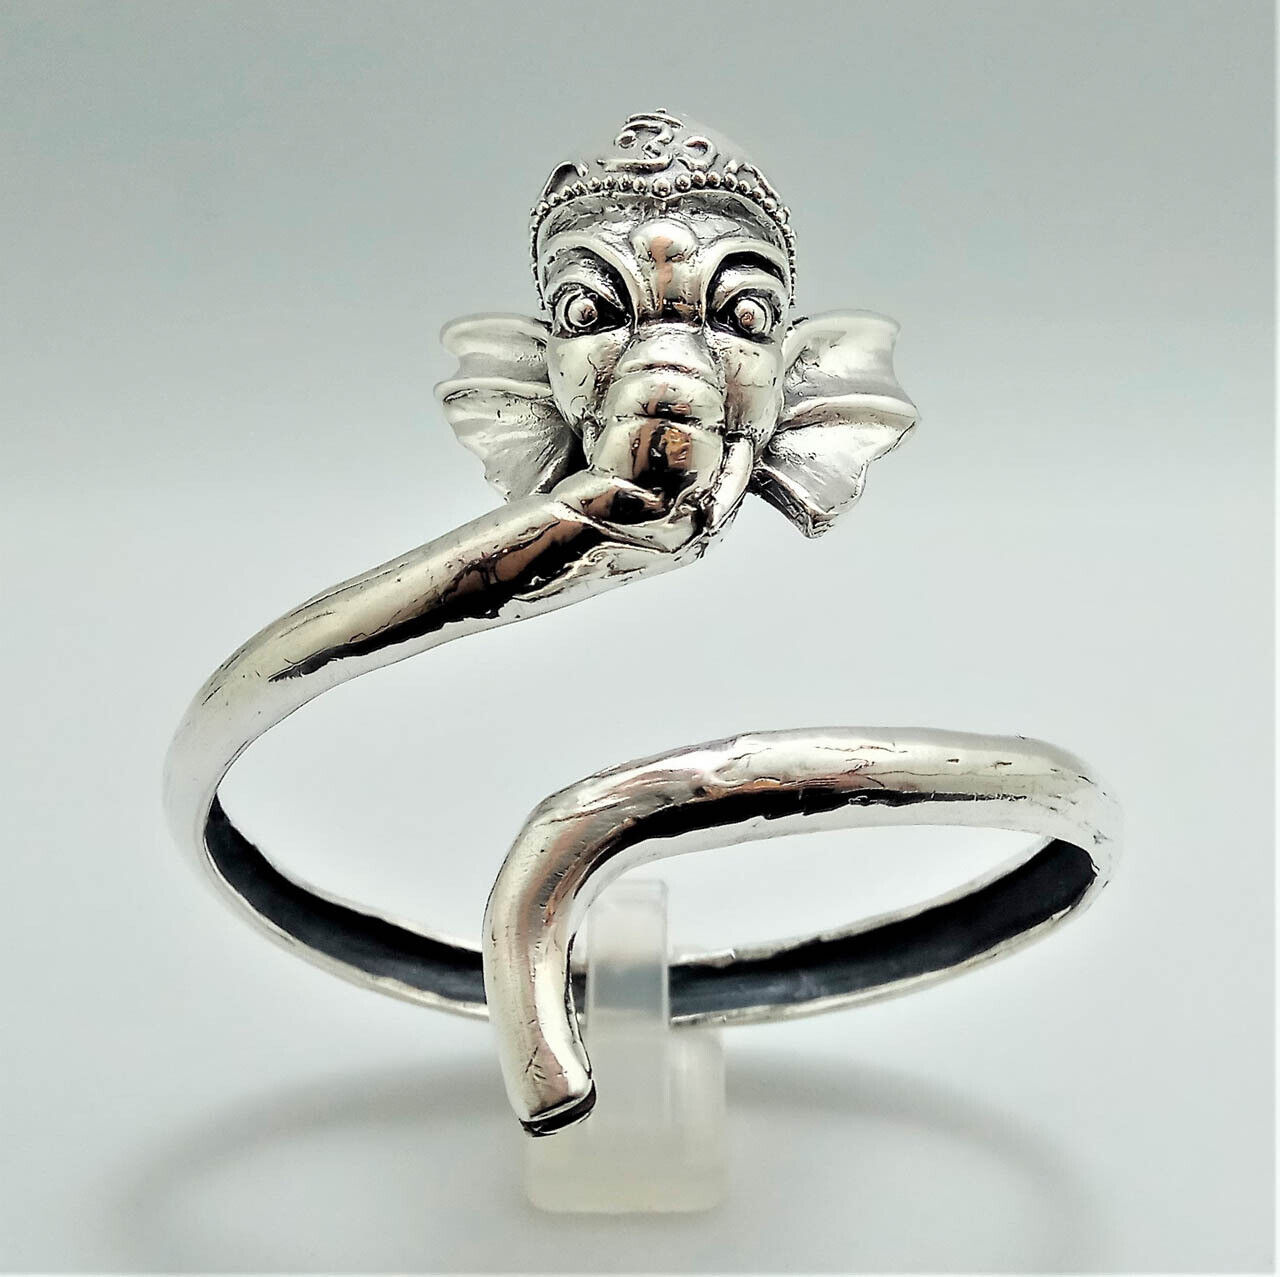 925 Sterling Silver Elephant Bracelet Great Ganesha Blessing Lord of Success Wea Super cena powitalna